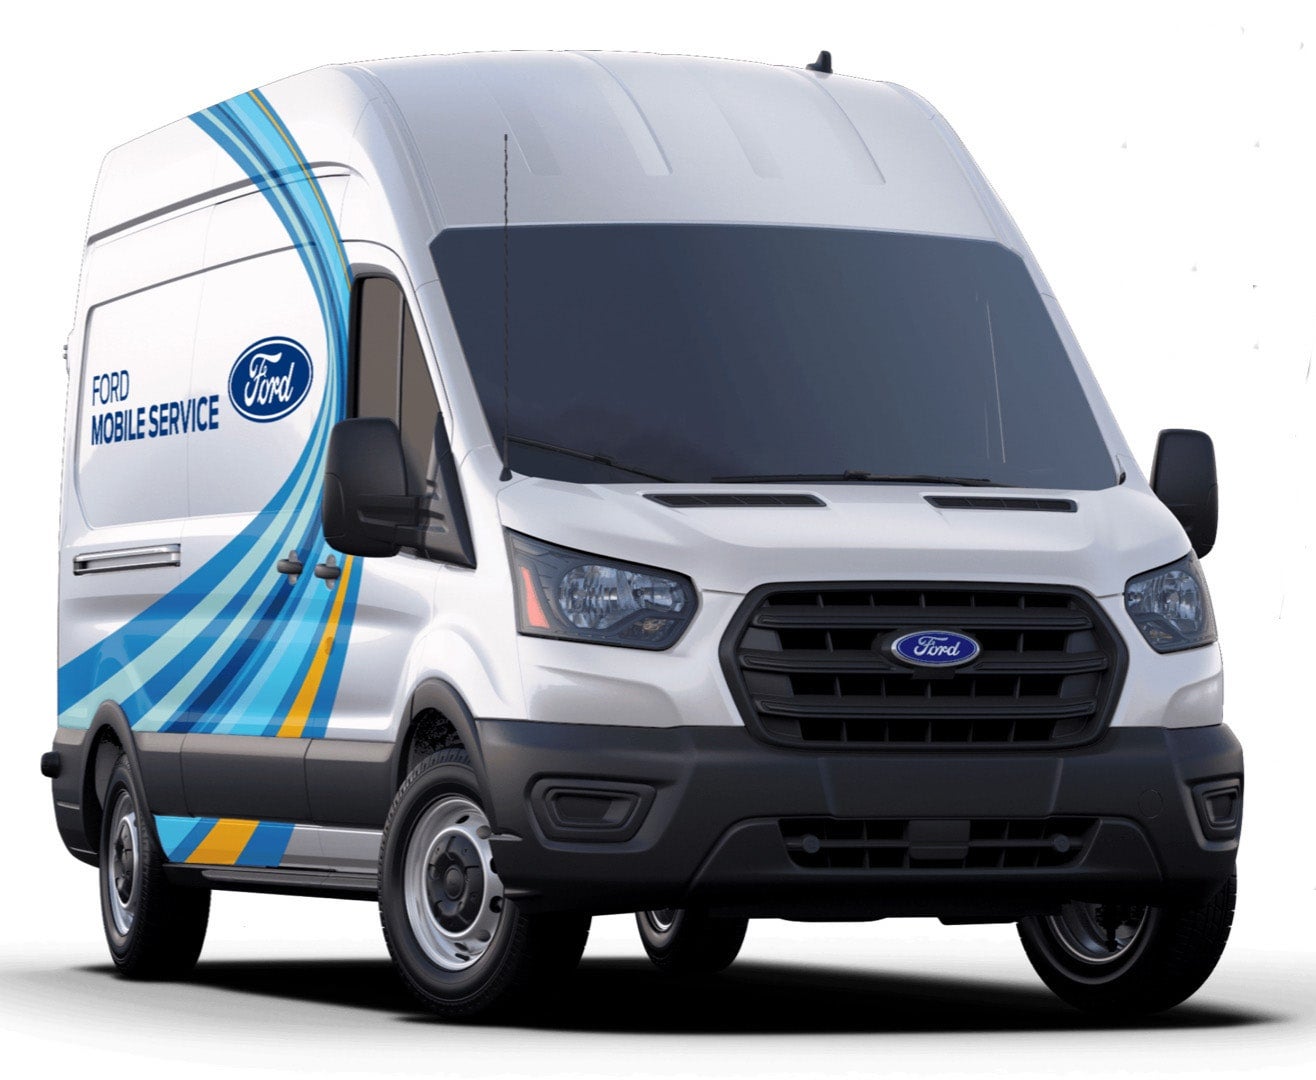 Ford Mobile Service van